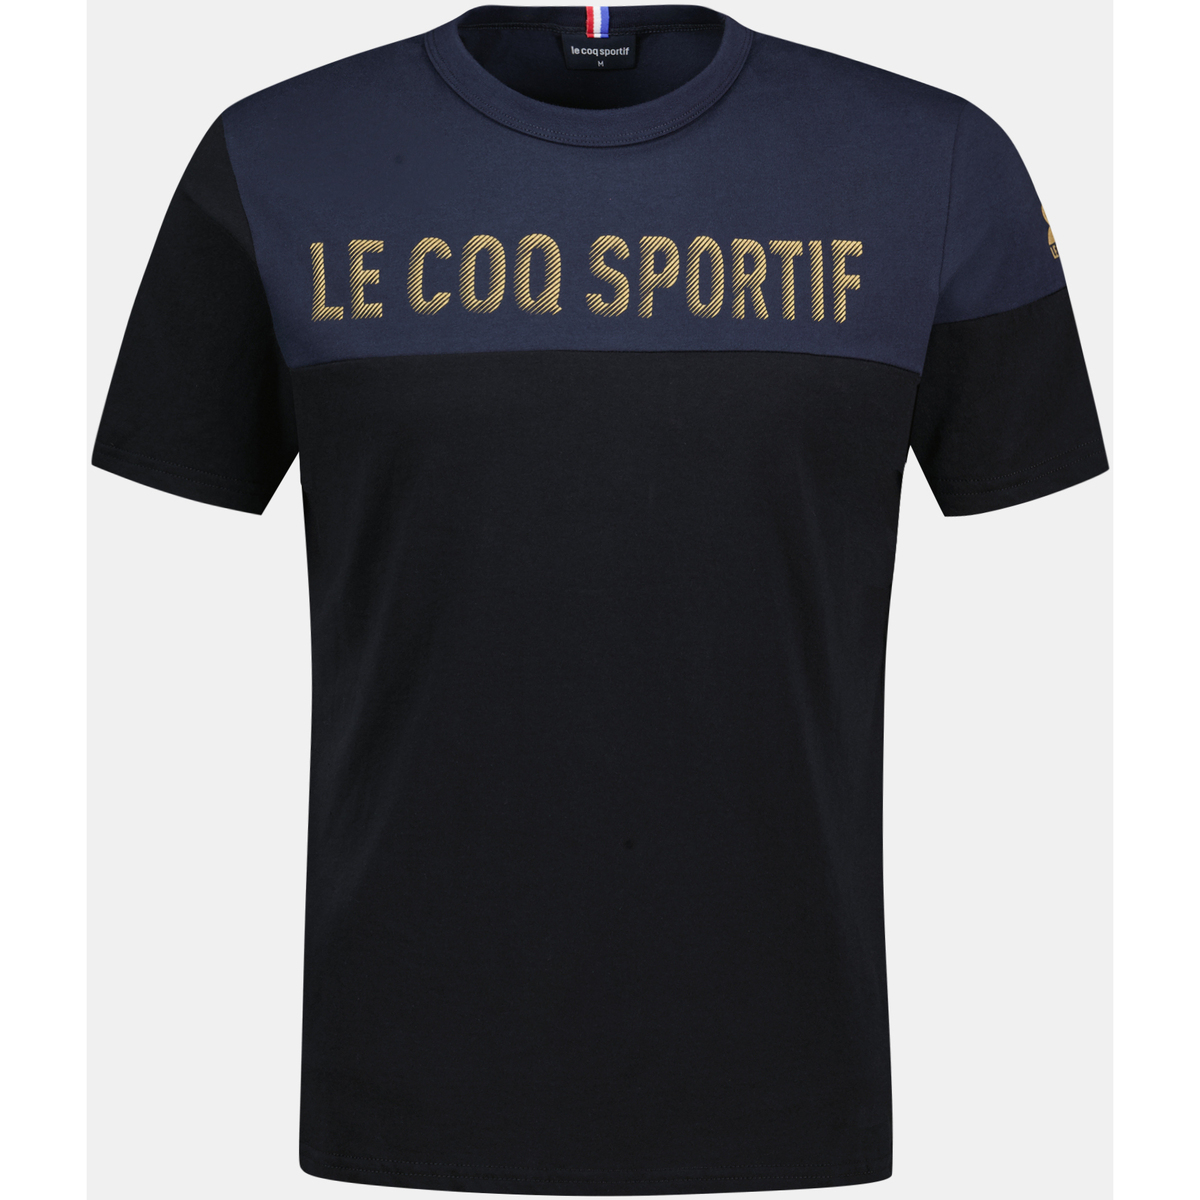 Le Coq Sportif Bleu T-shirt Homme IOm9Bfwf